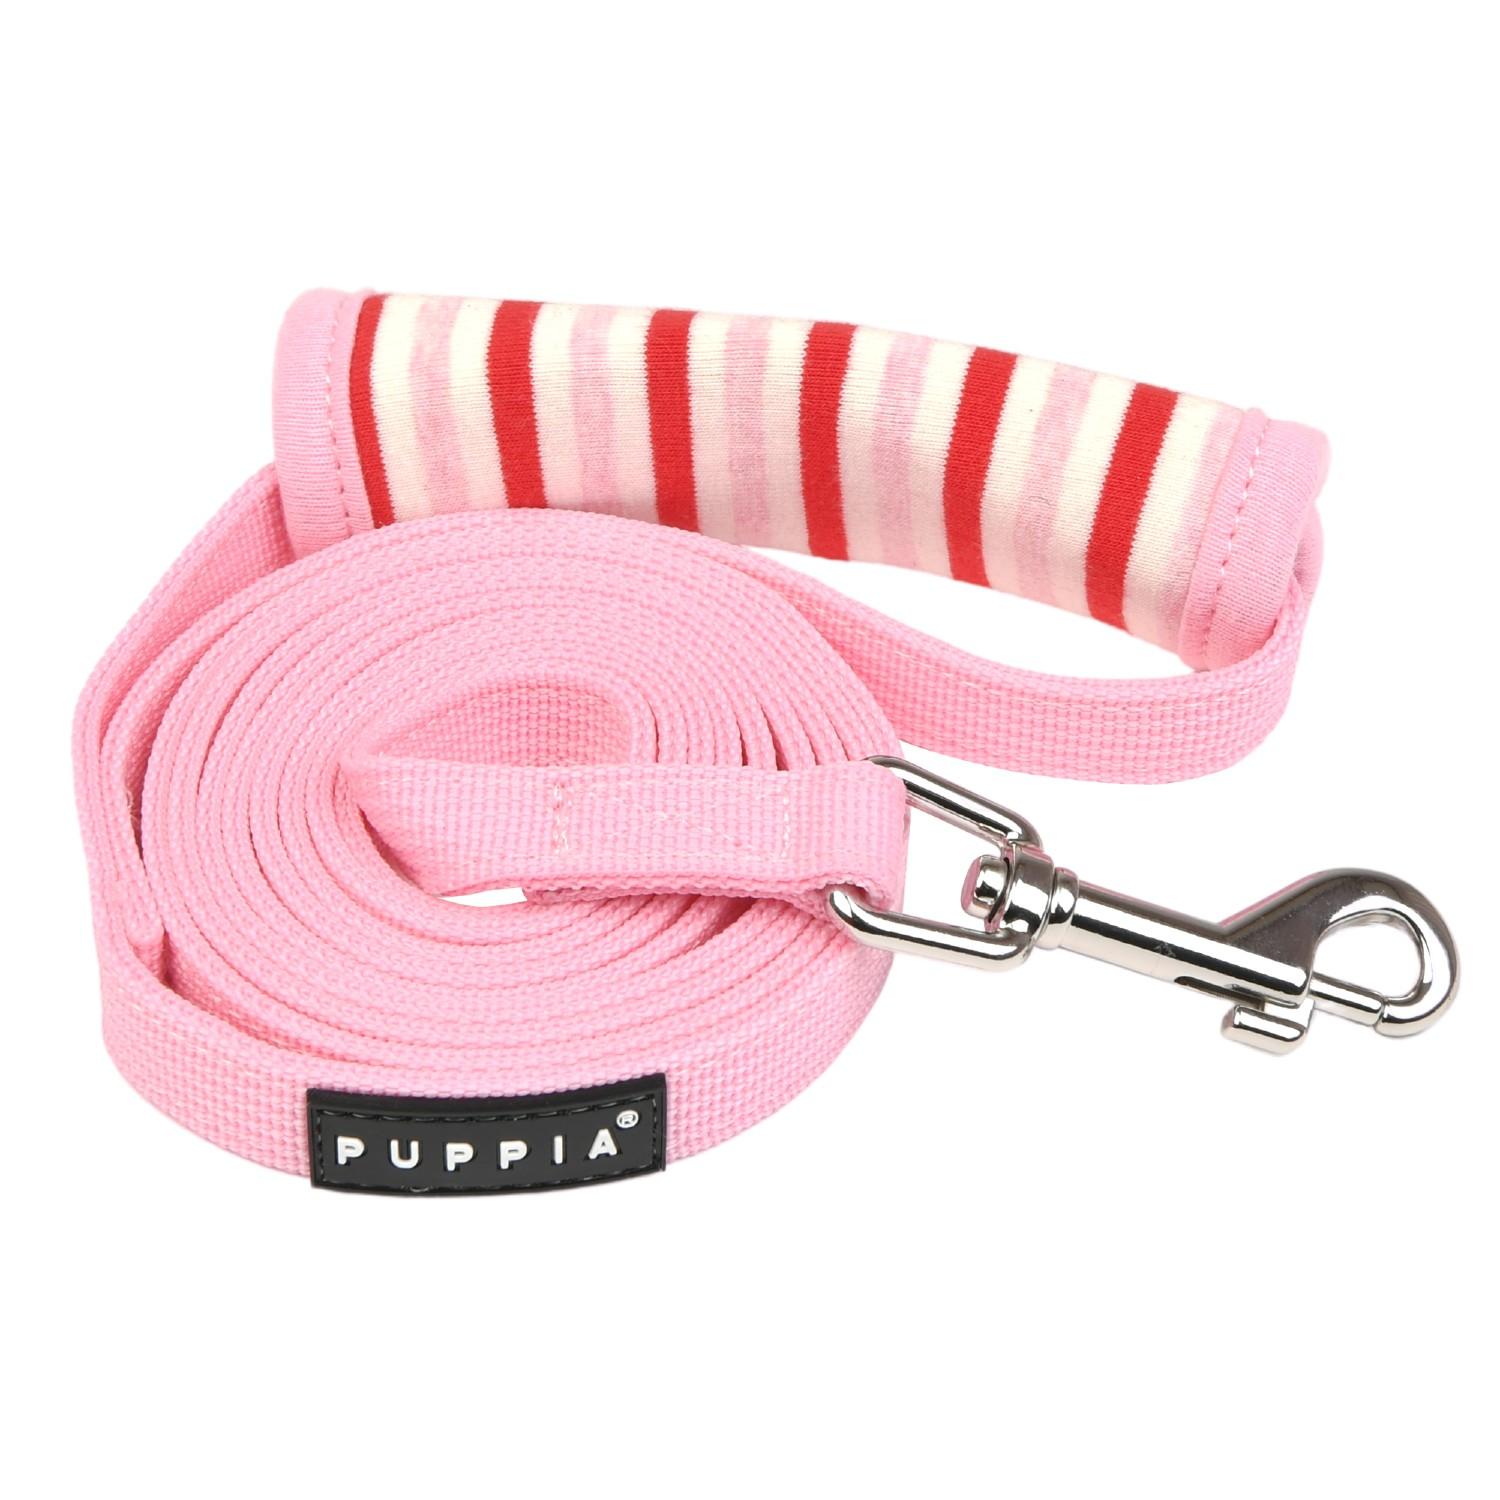 Seaman Dog Leash by Puppia - Pink